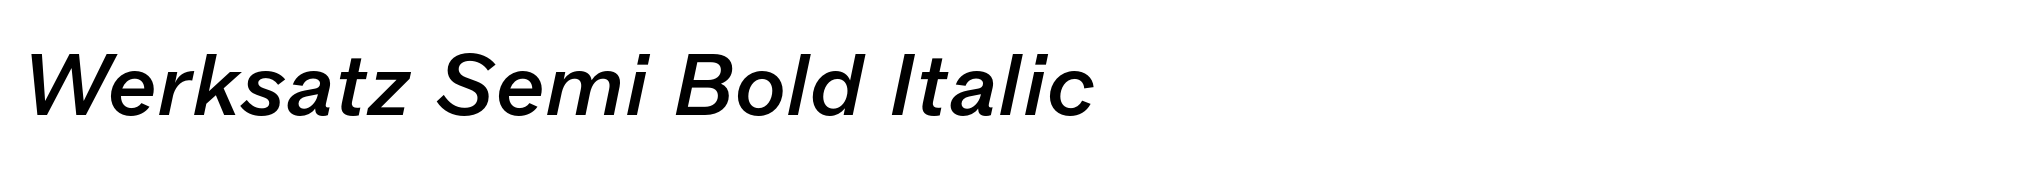 Werksatz Semi Bold Italic image